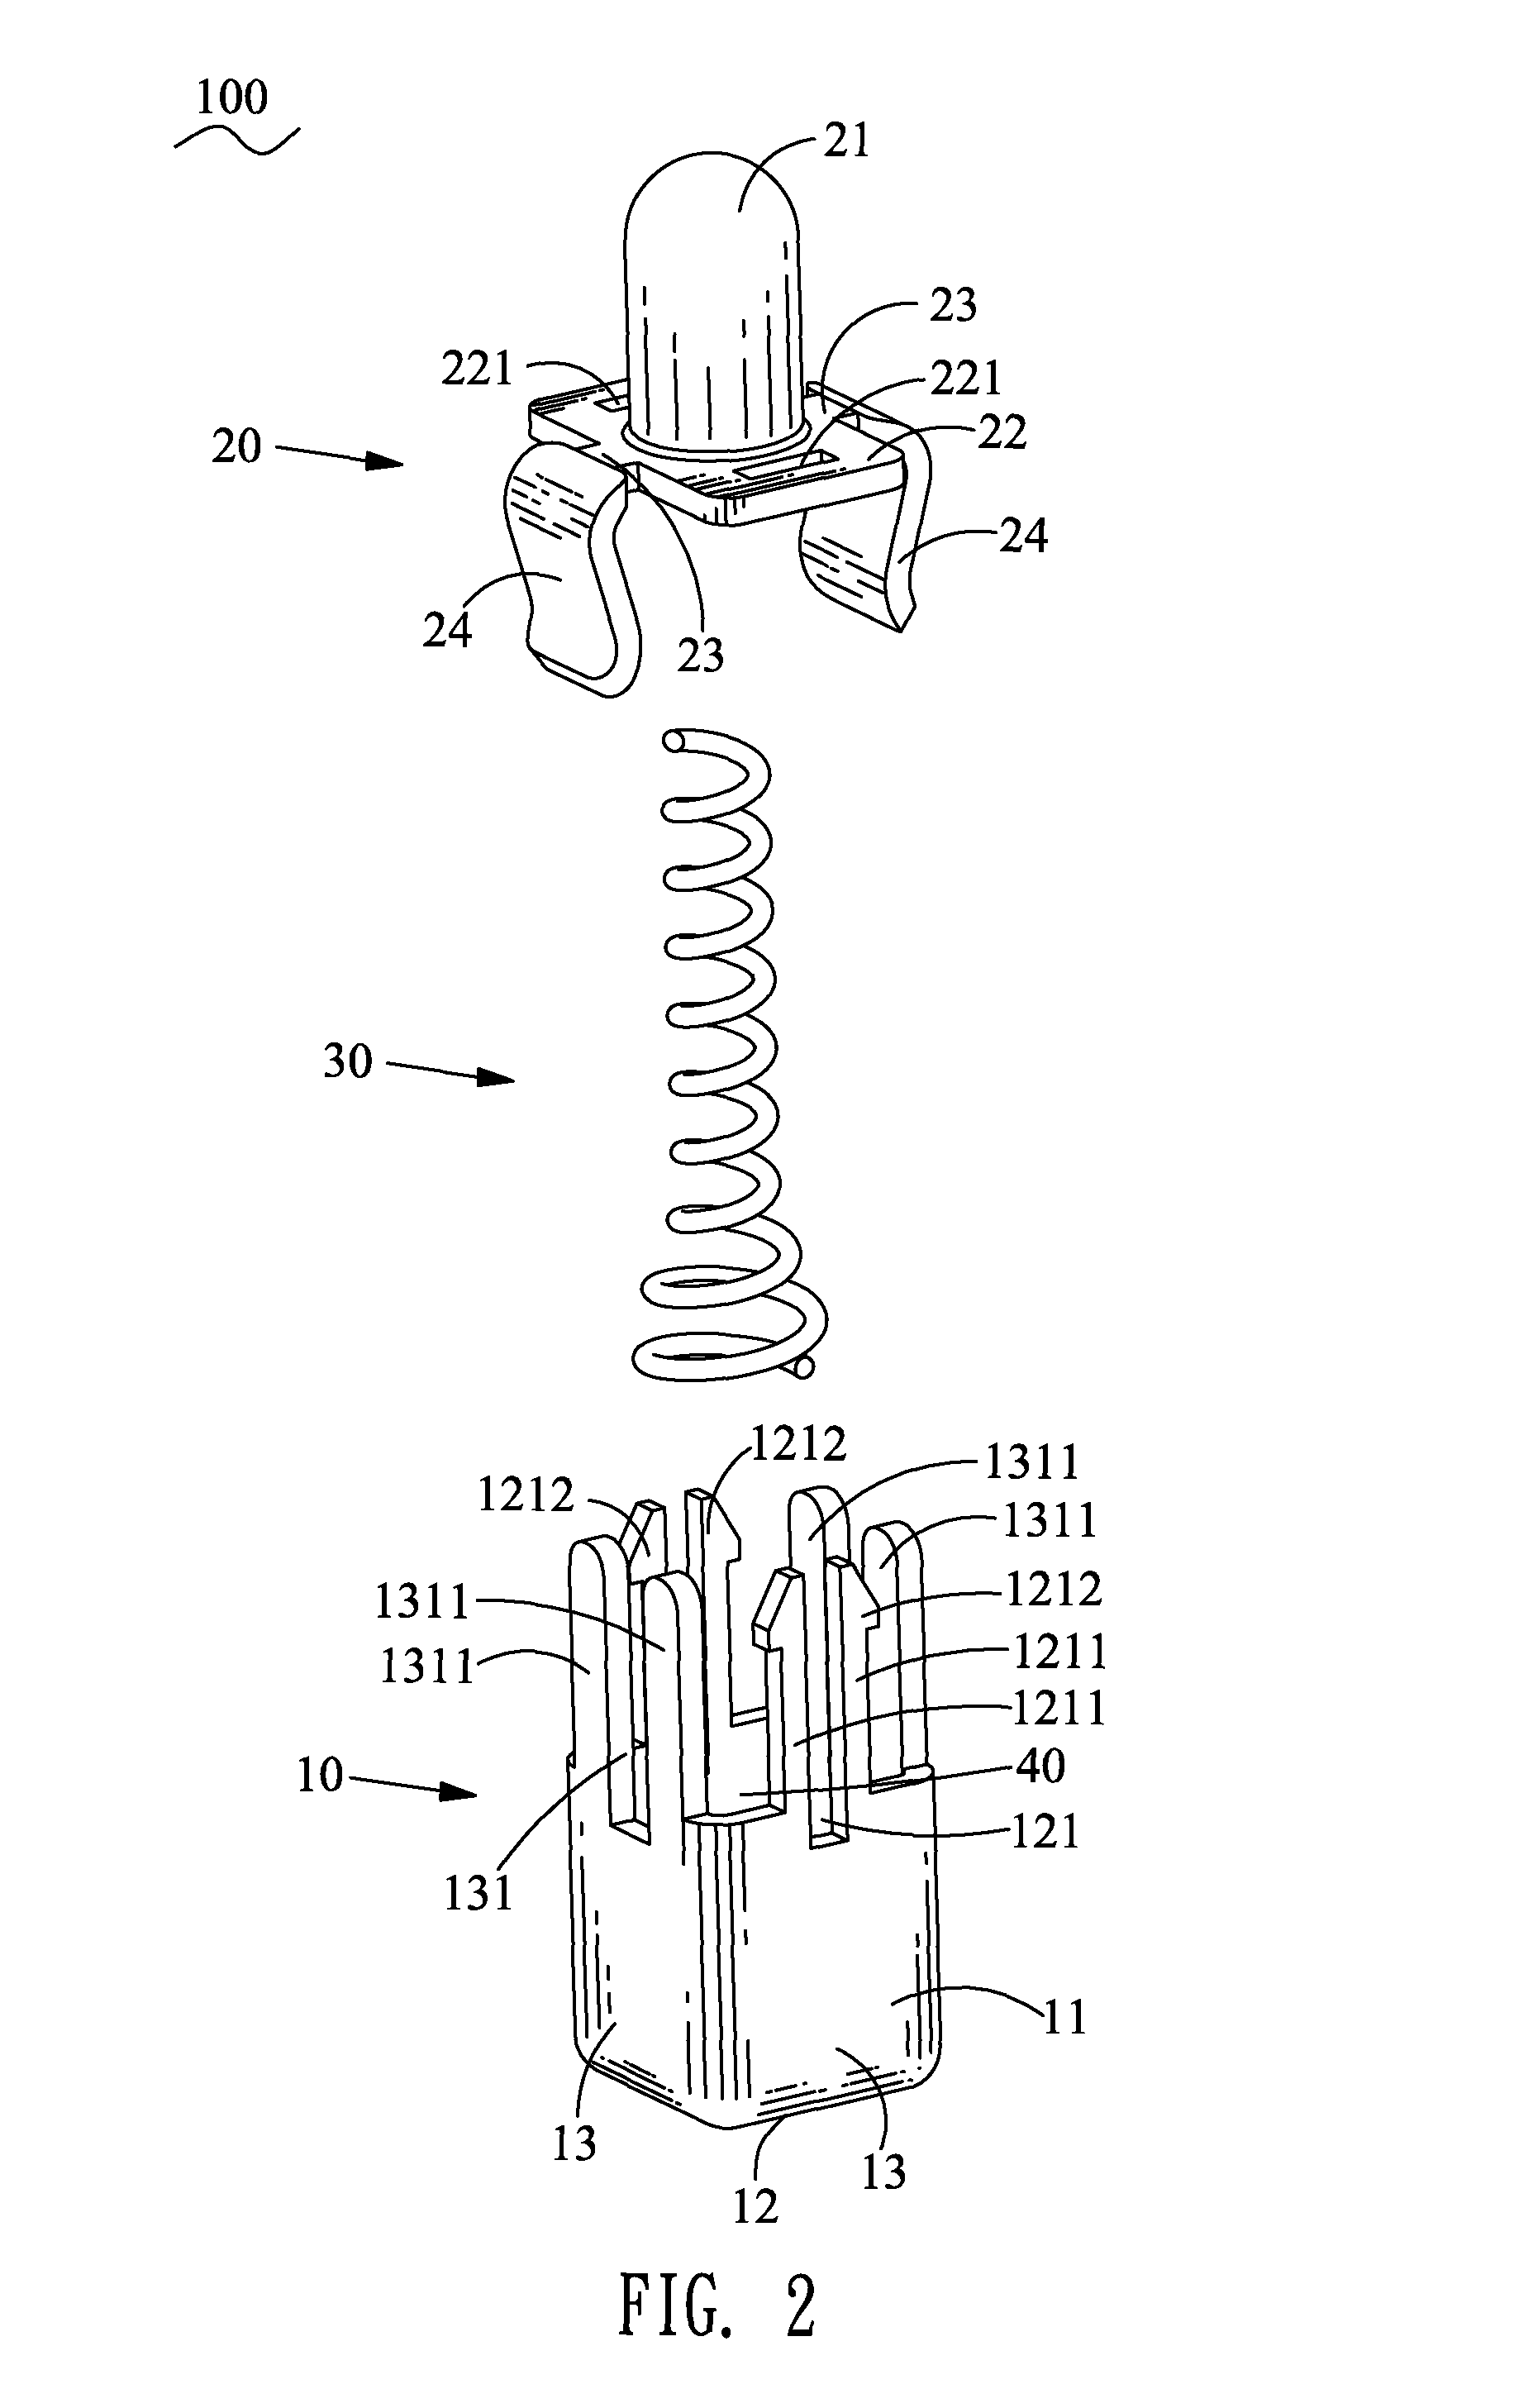 Probe connector